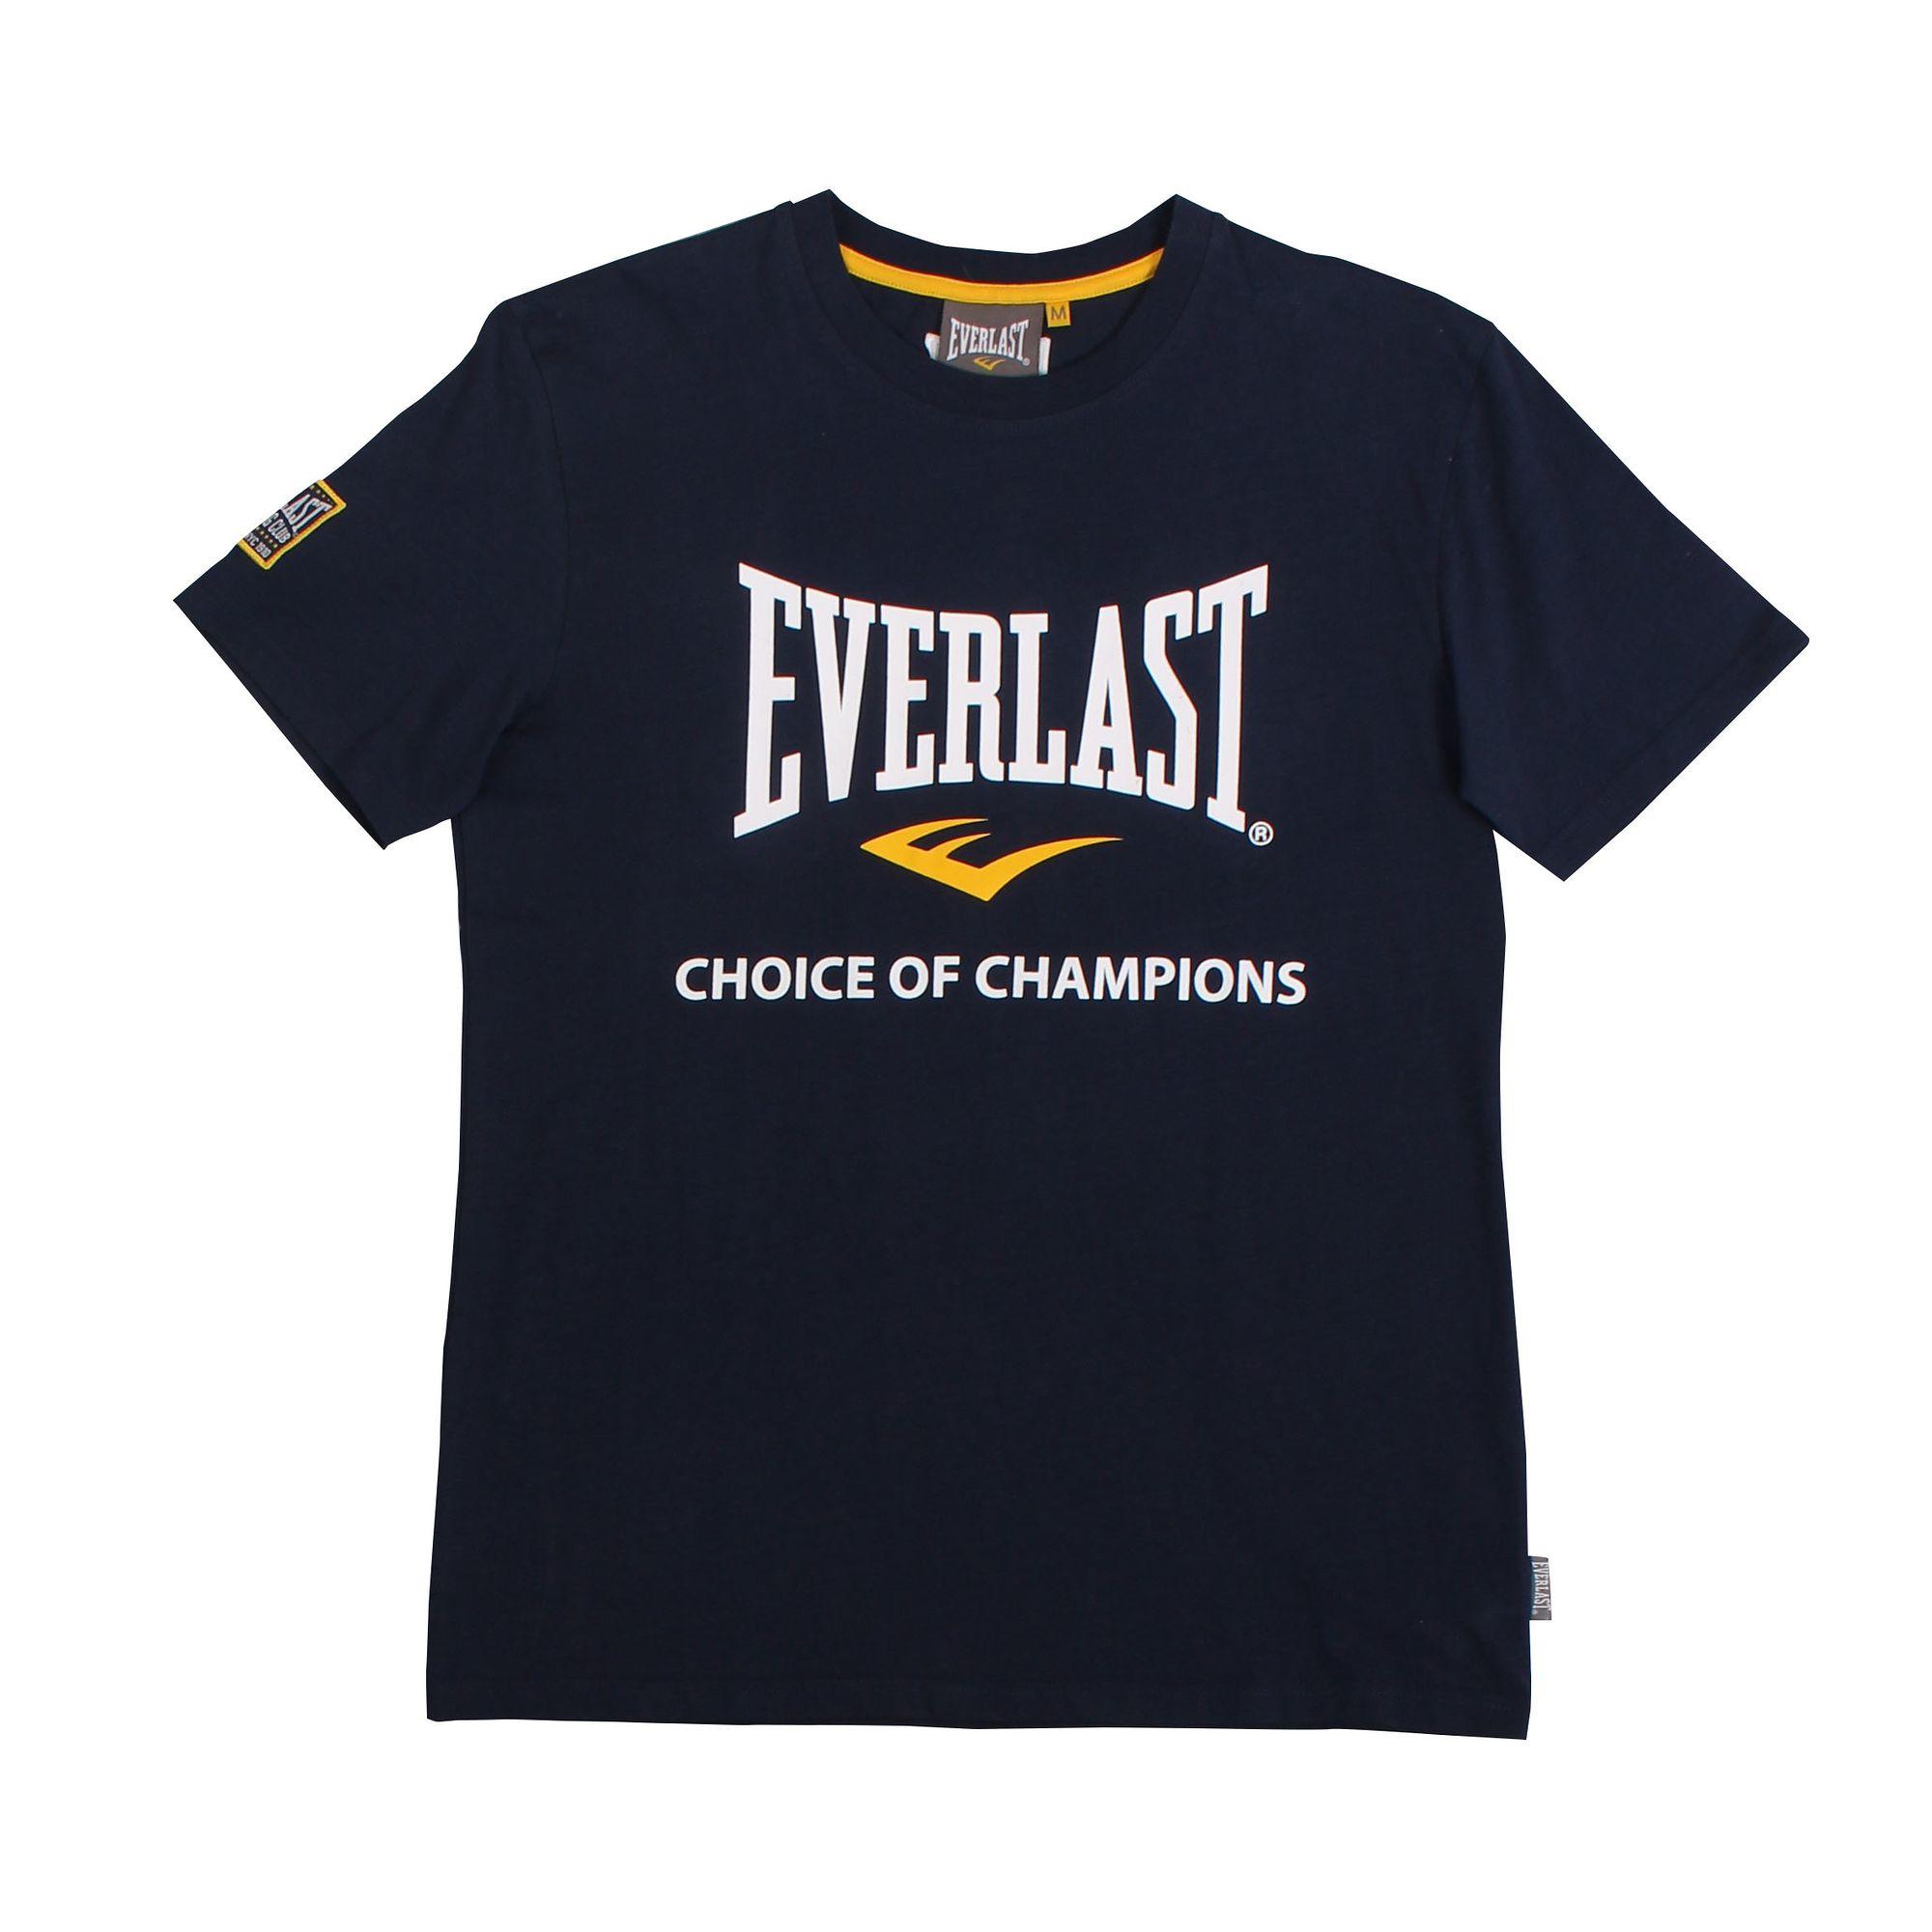 EVERLAST Choice of Champions T-Shirt - Black